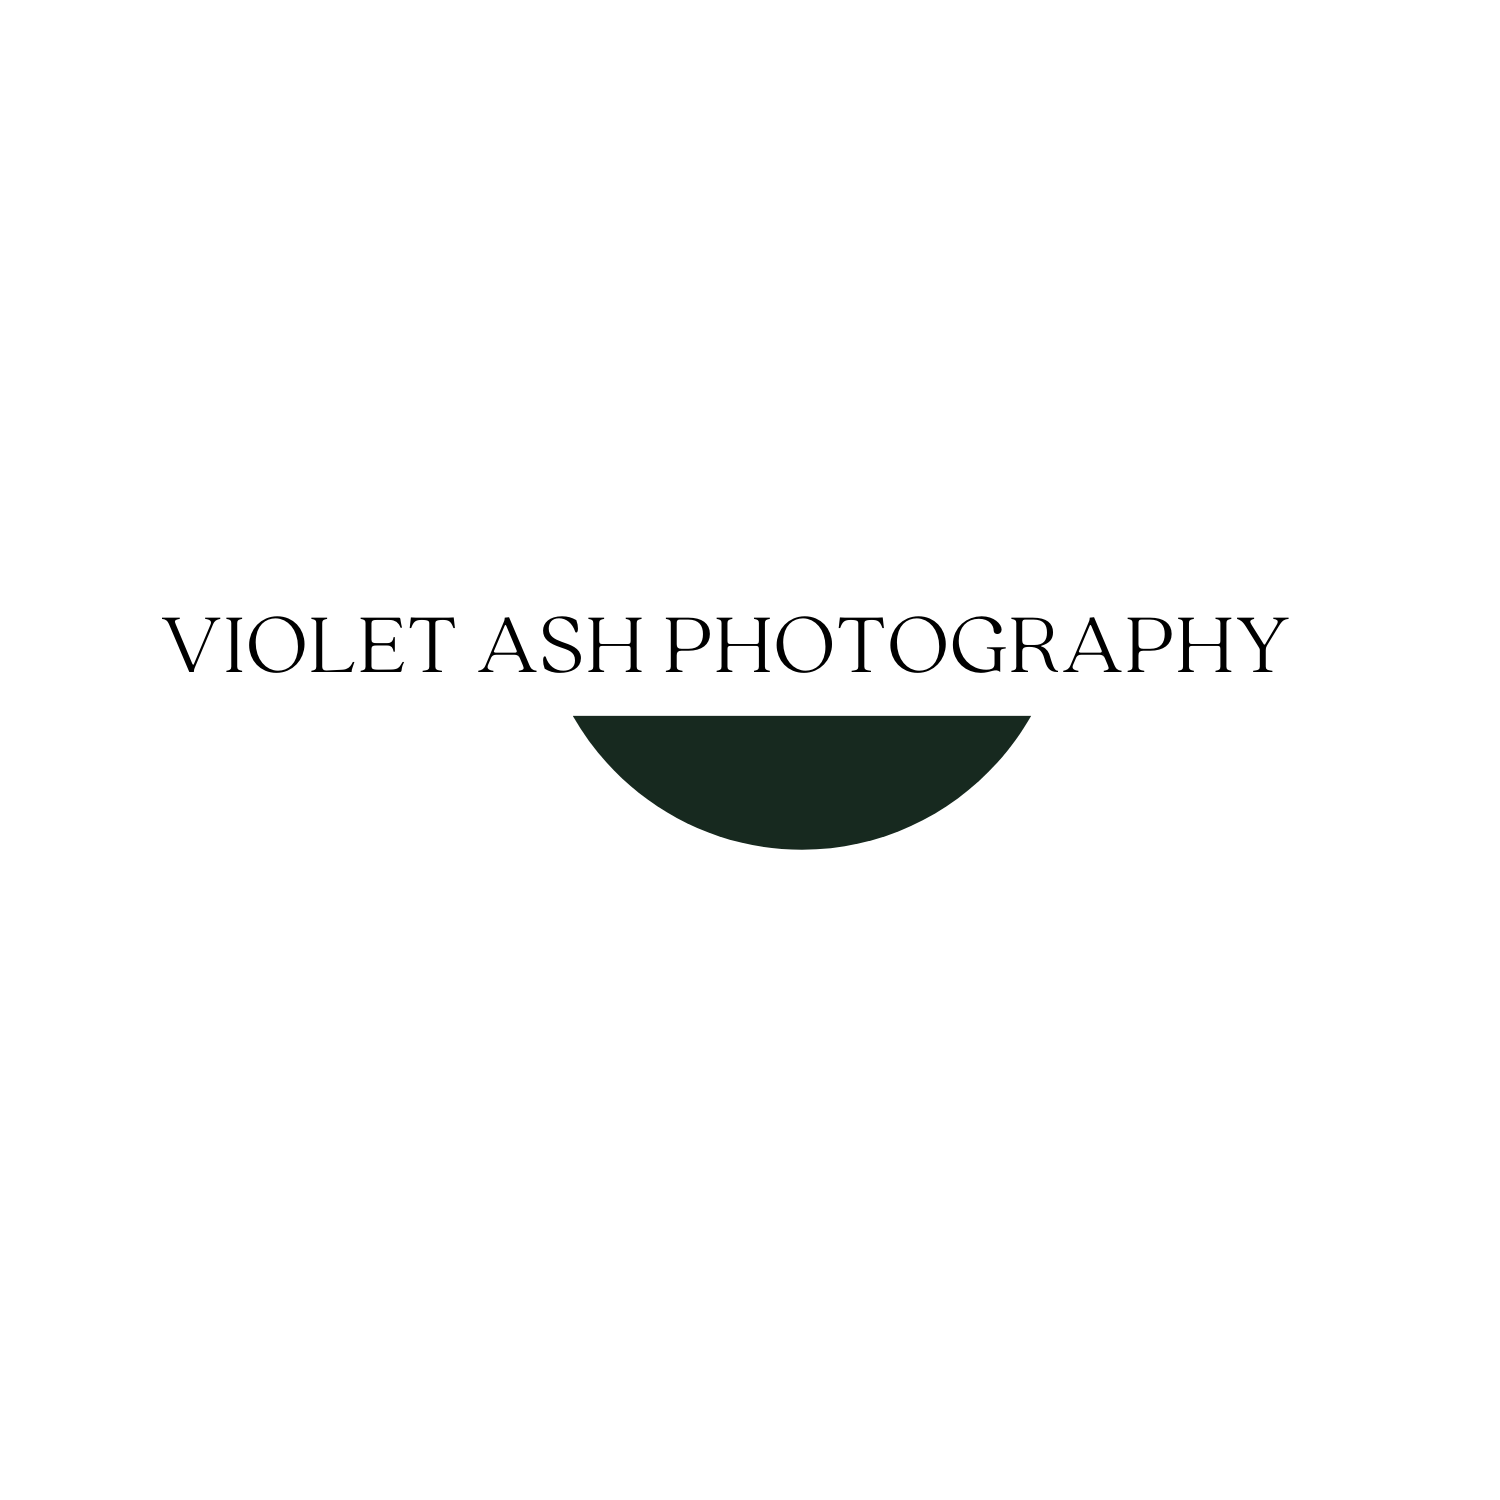 Violet Ash Photography